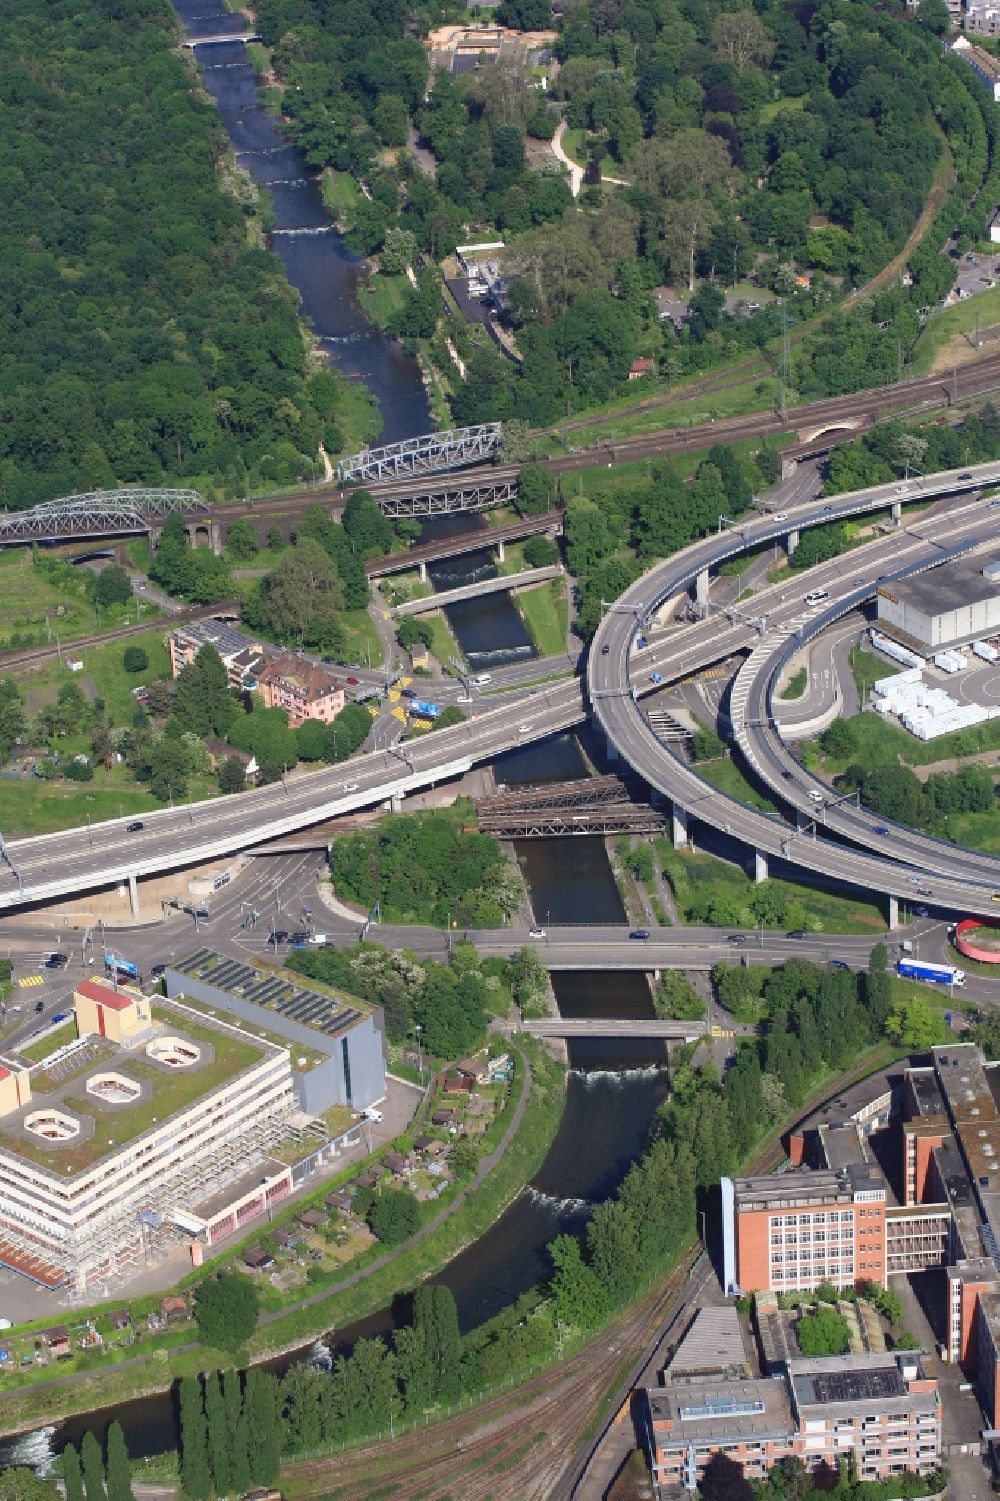 Luftbild Basel - Brückenbauwerke entlang der Wiese in Basel, Schweiz